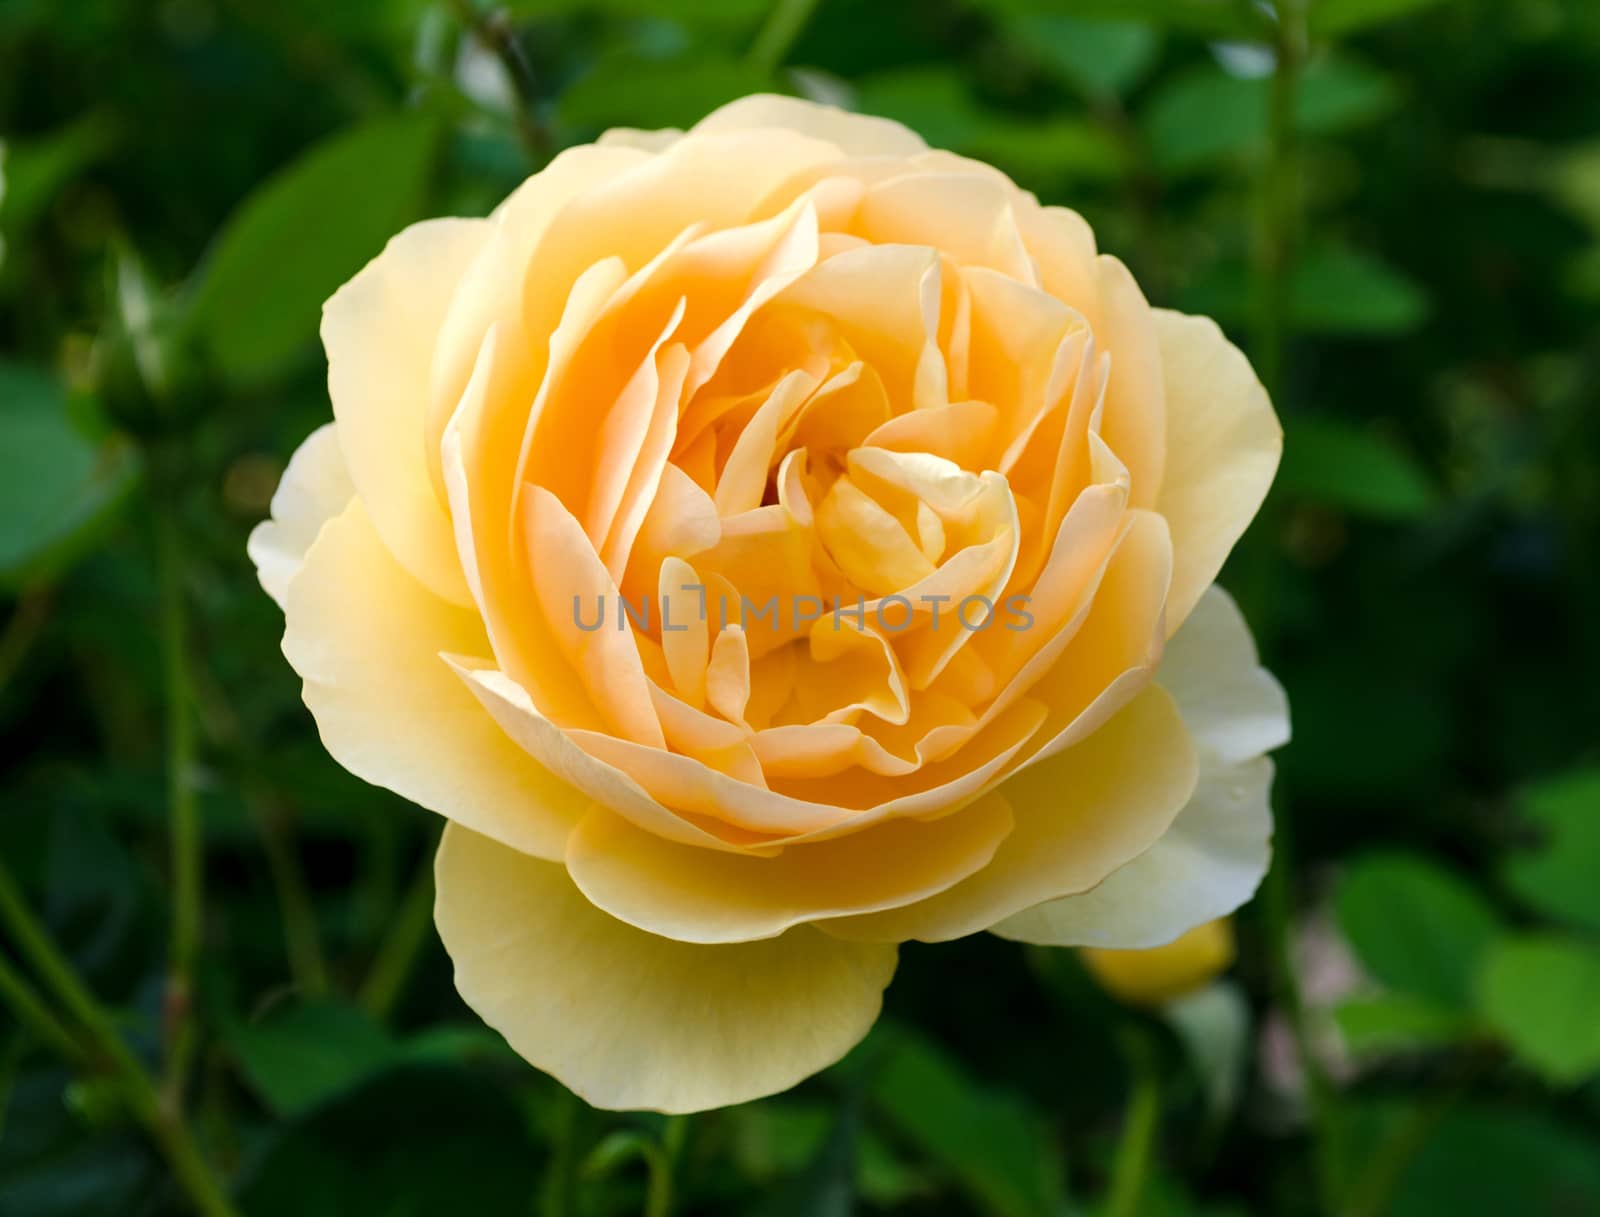 Beautiful rose in the garden by DNKSTUDIO